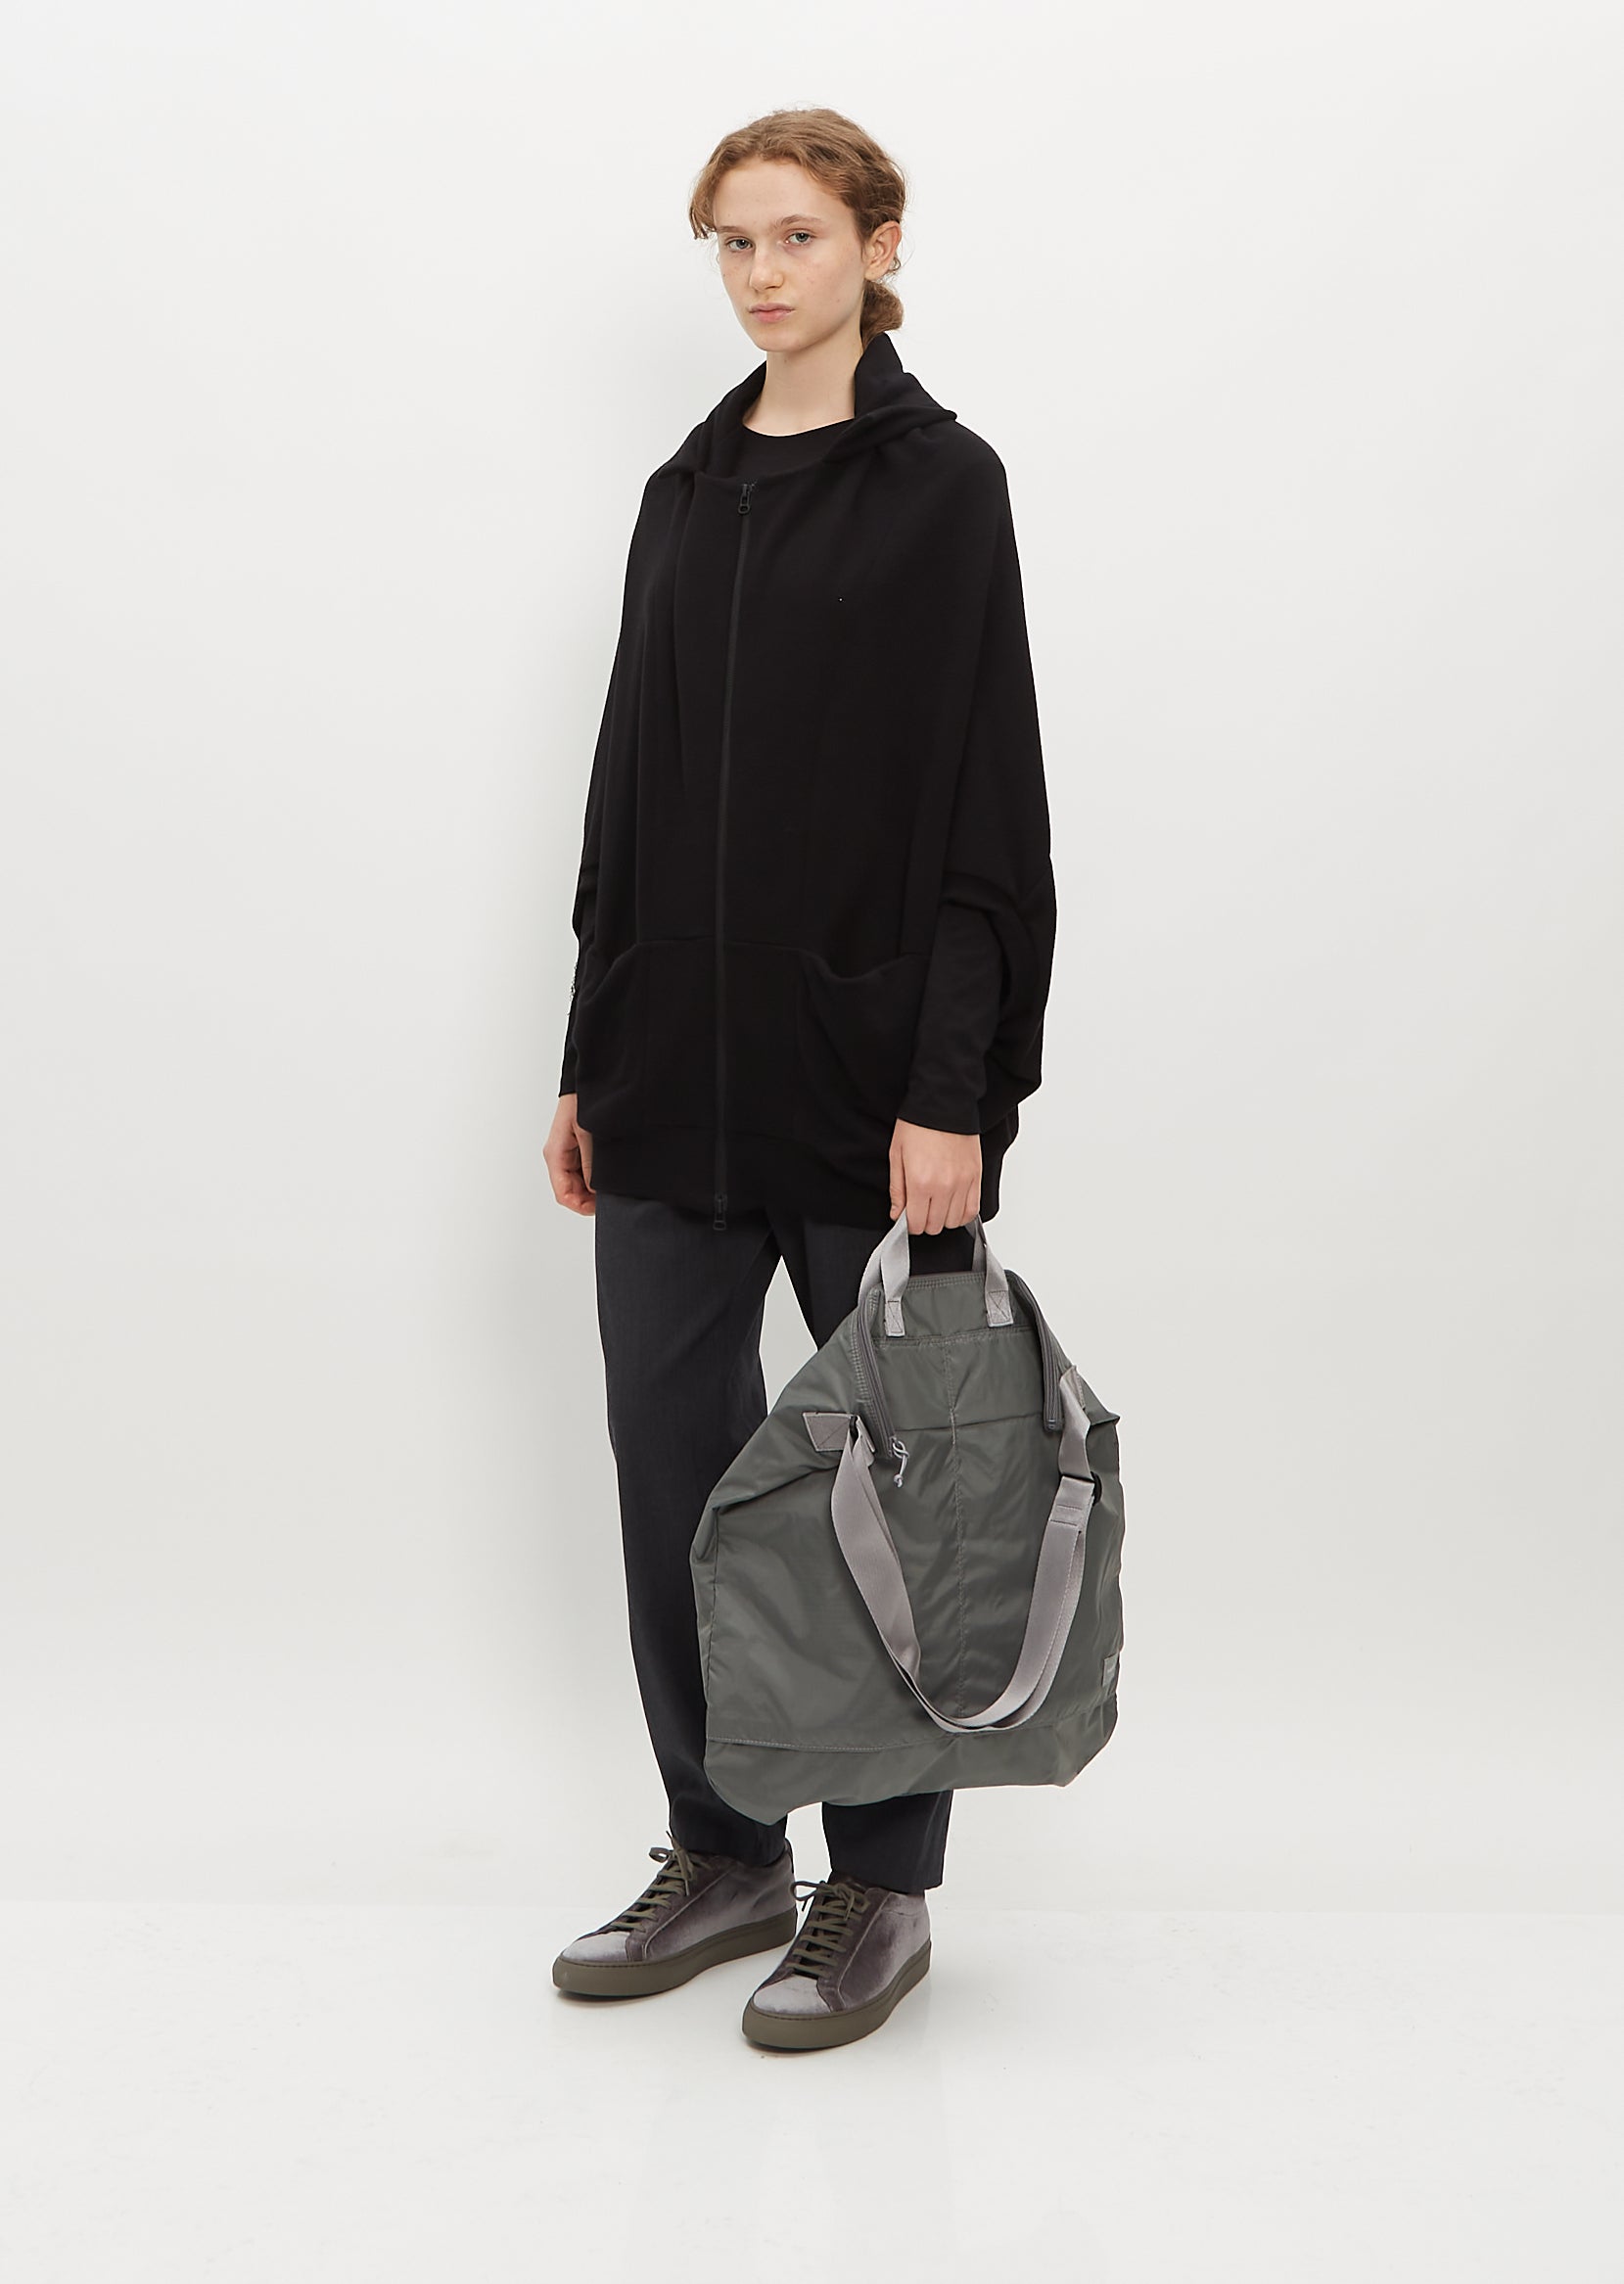 Porter-Yoshida & Co. – Flex 2-Way Helmet Bag Black